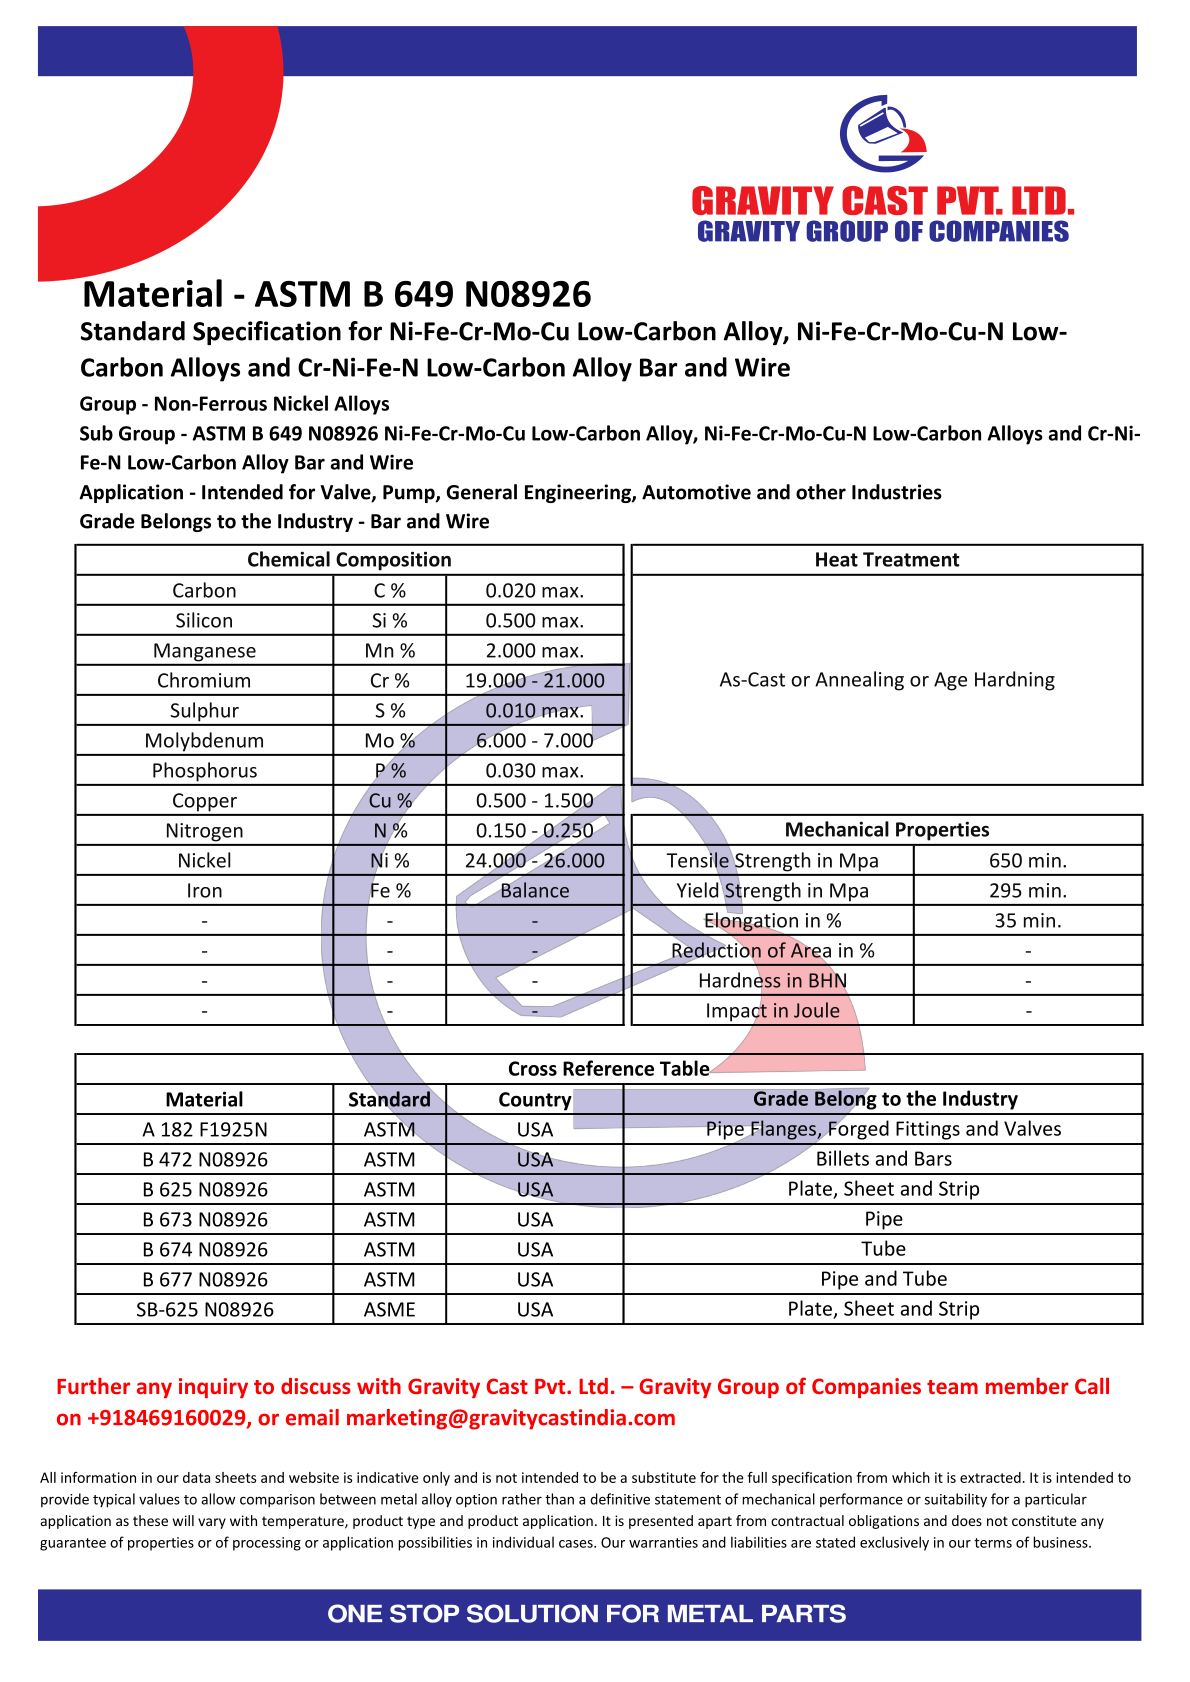 ASTM B 649 N08926.pdf